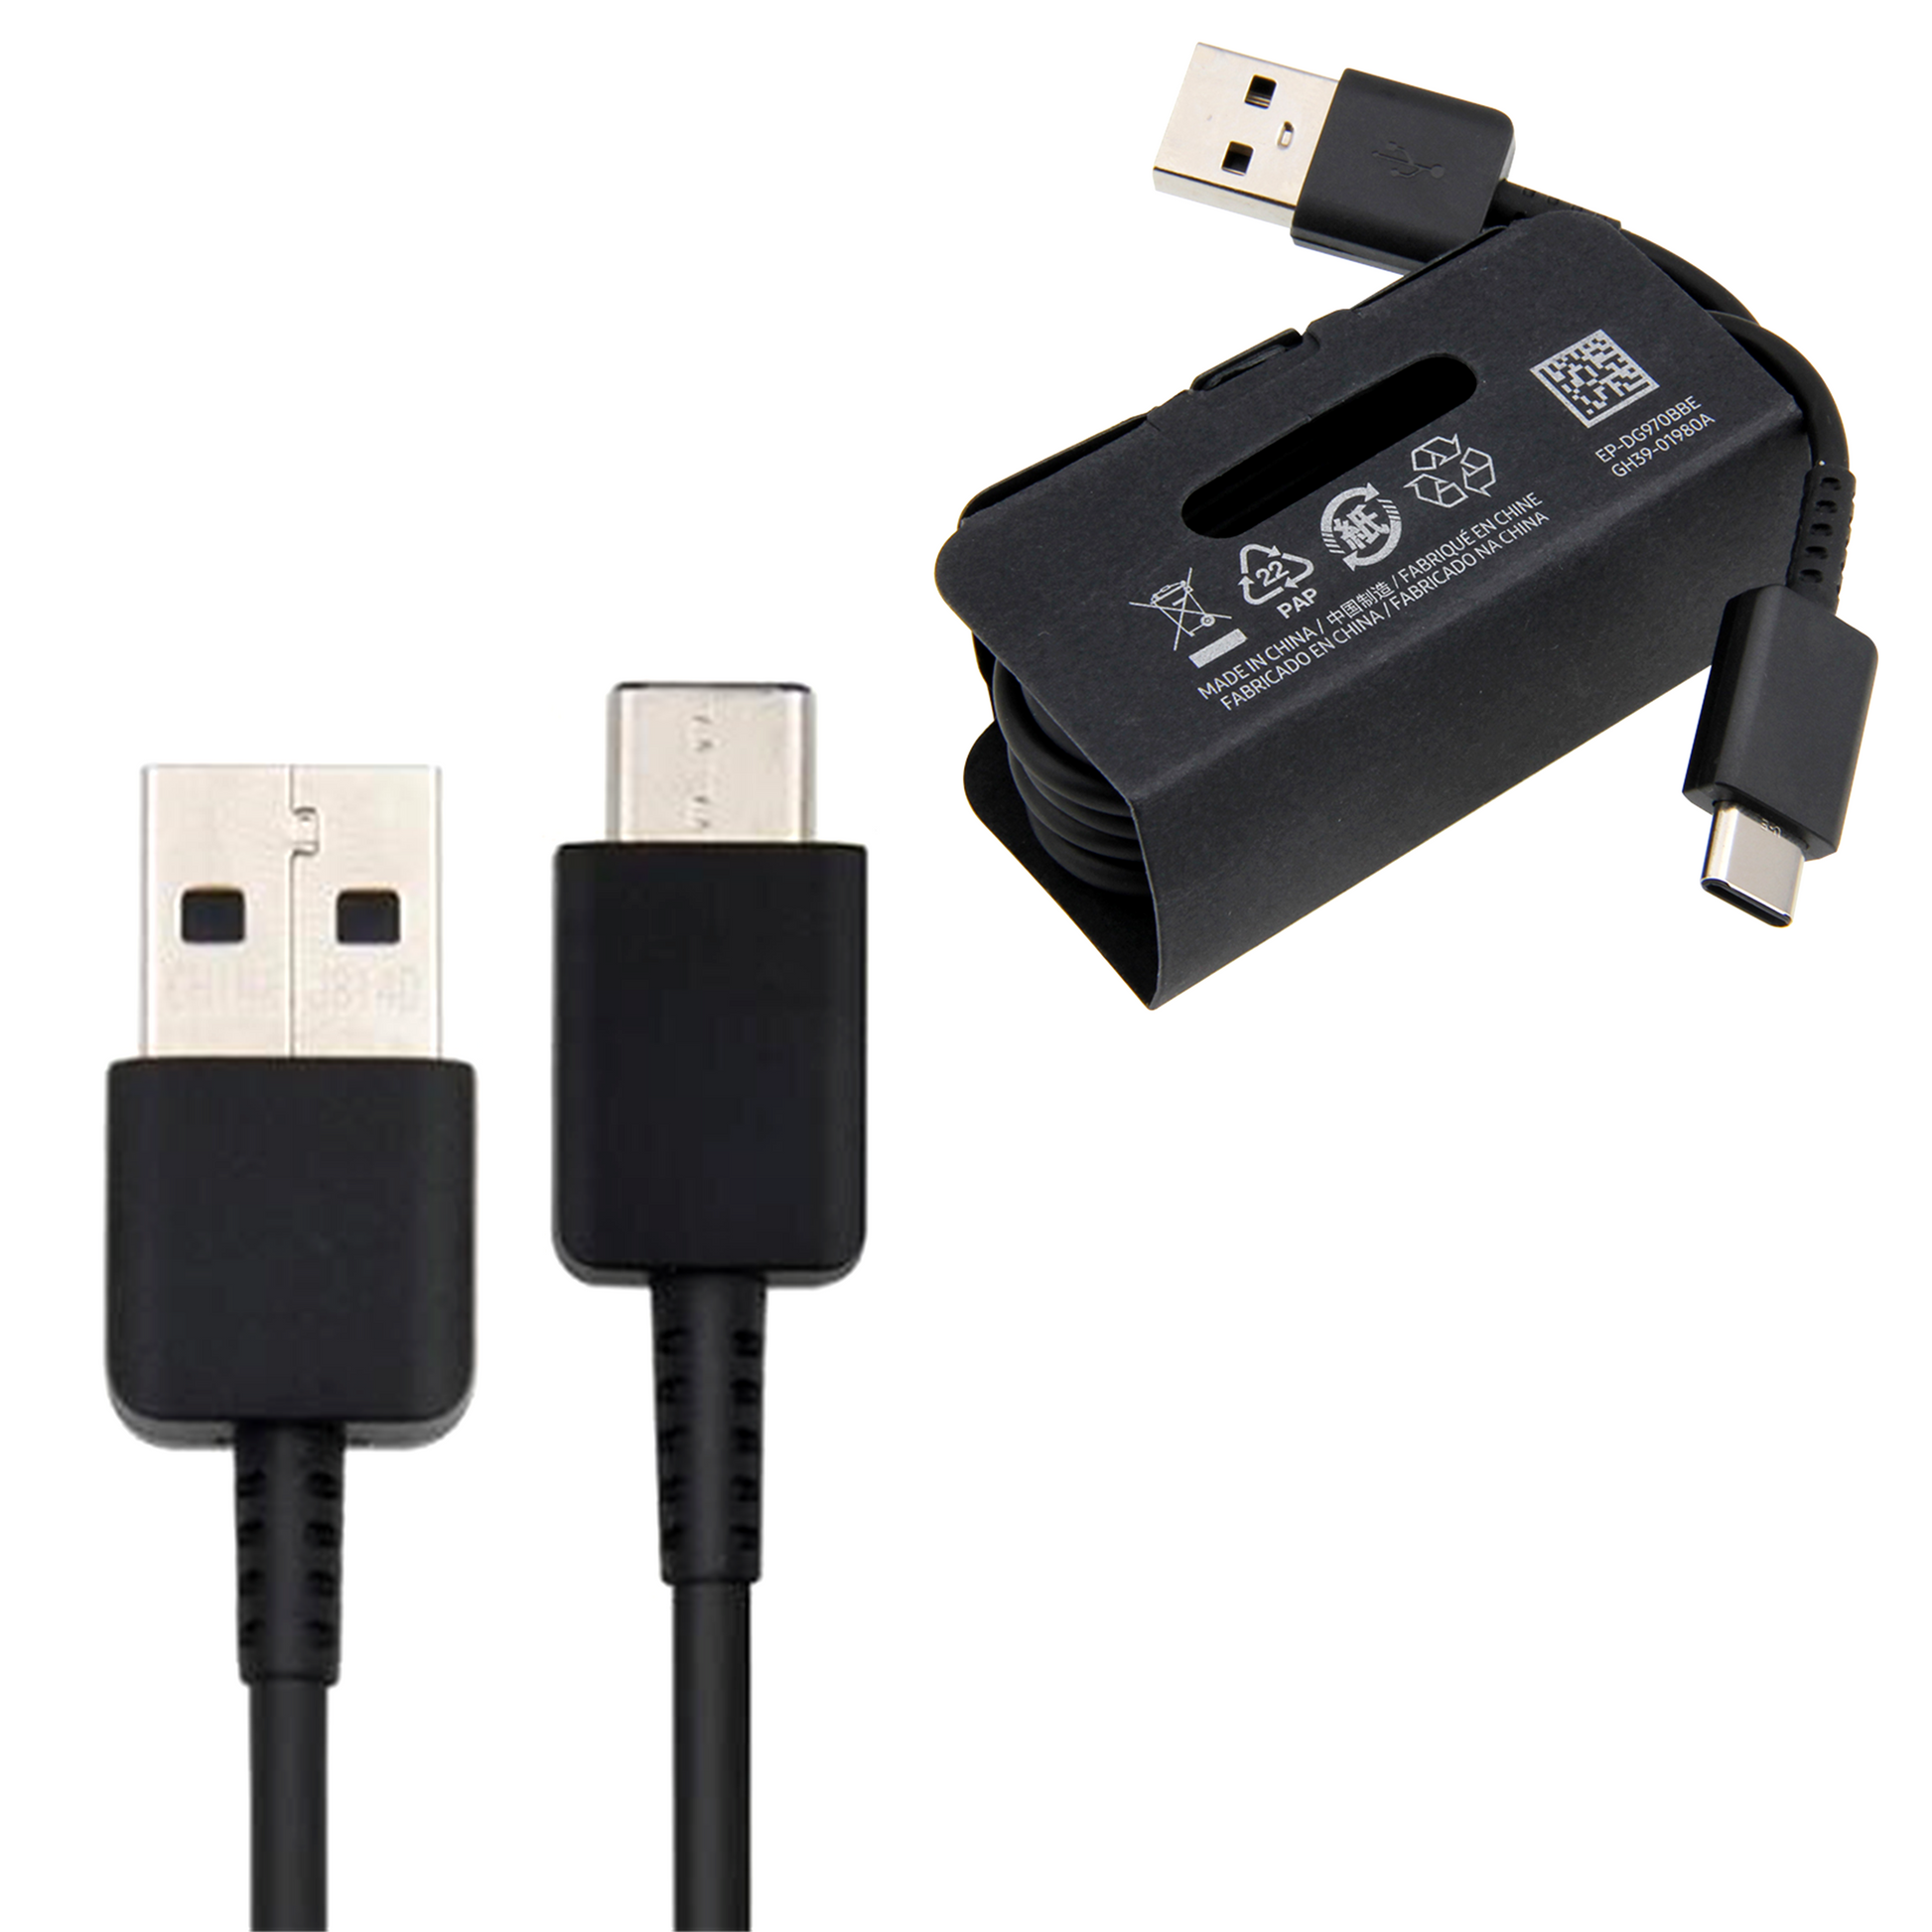 Samsung Charger USB-C Data Type C Cable for Samsung Galaxy S10 / S10e Lite / S10+ Plus (1M) Black EP-DG970BBE www.BritishModules.com